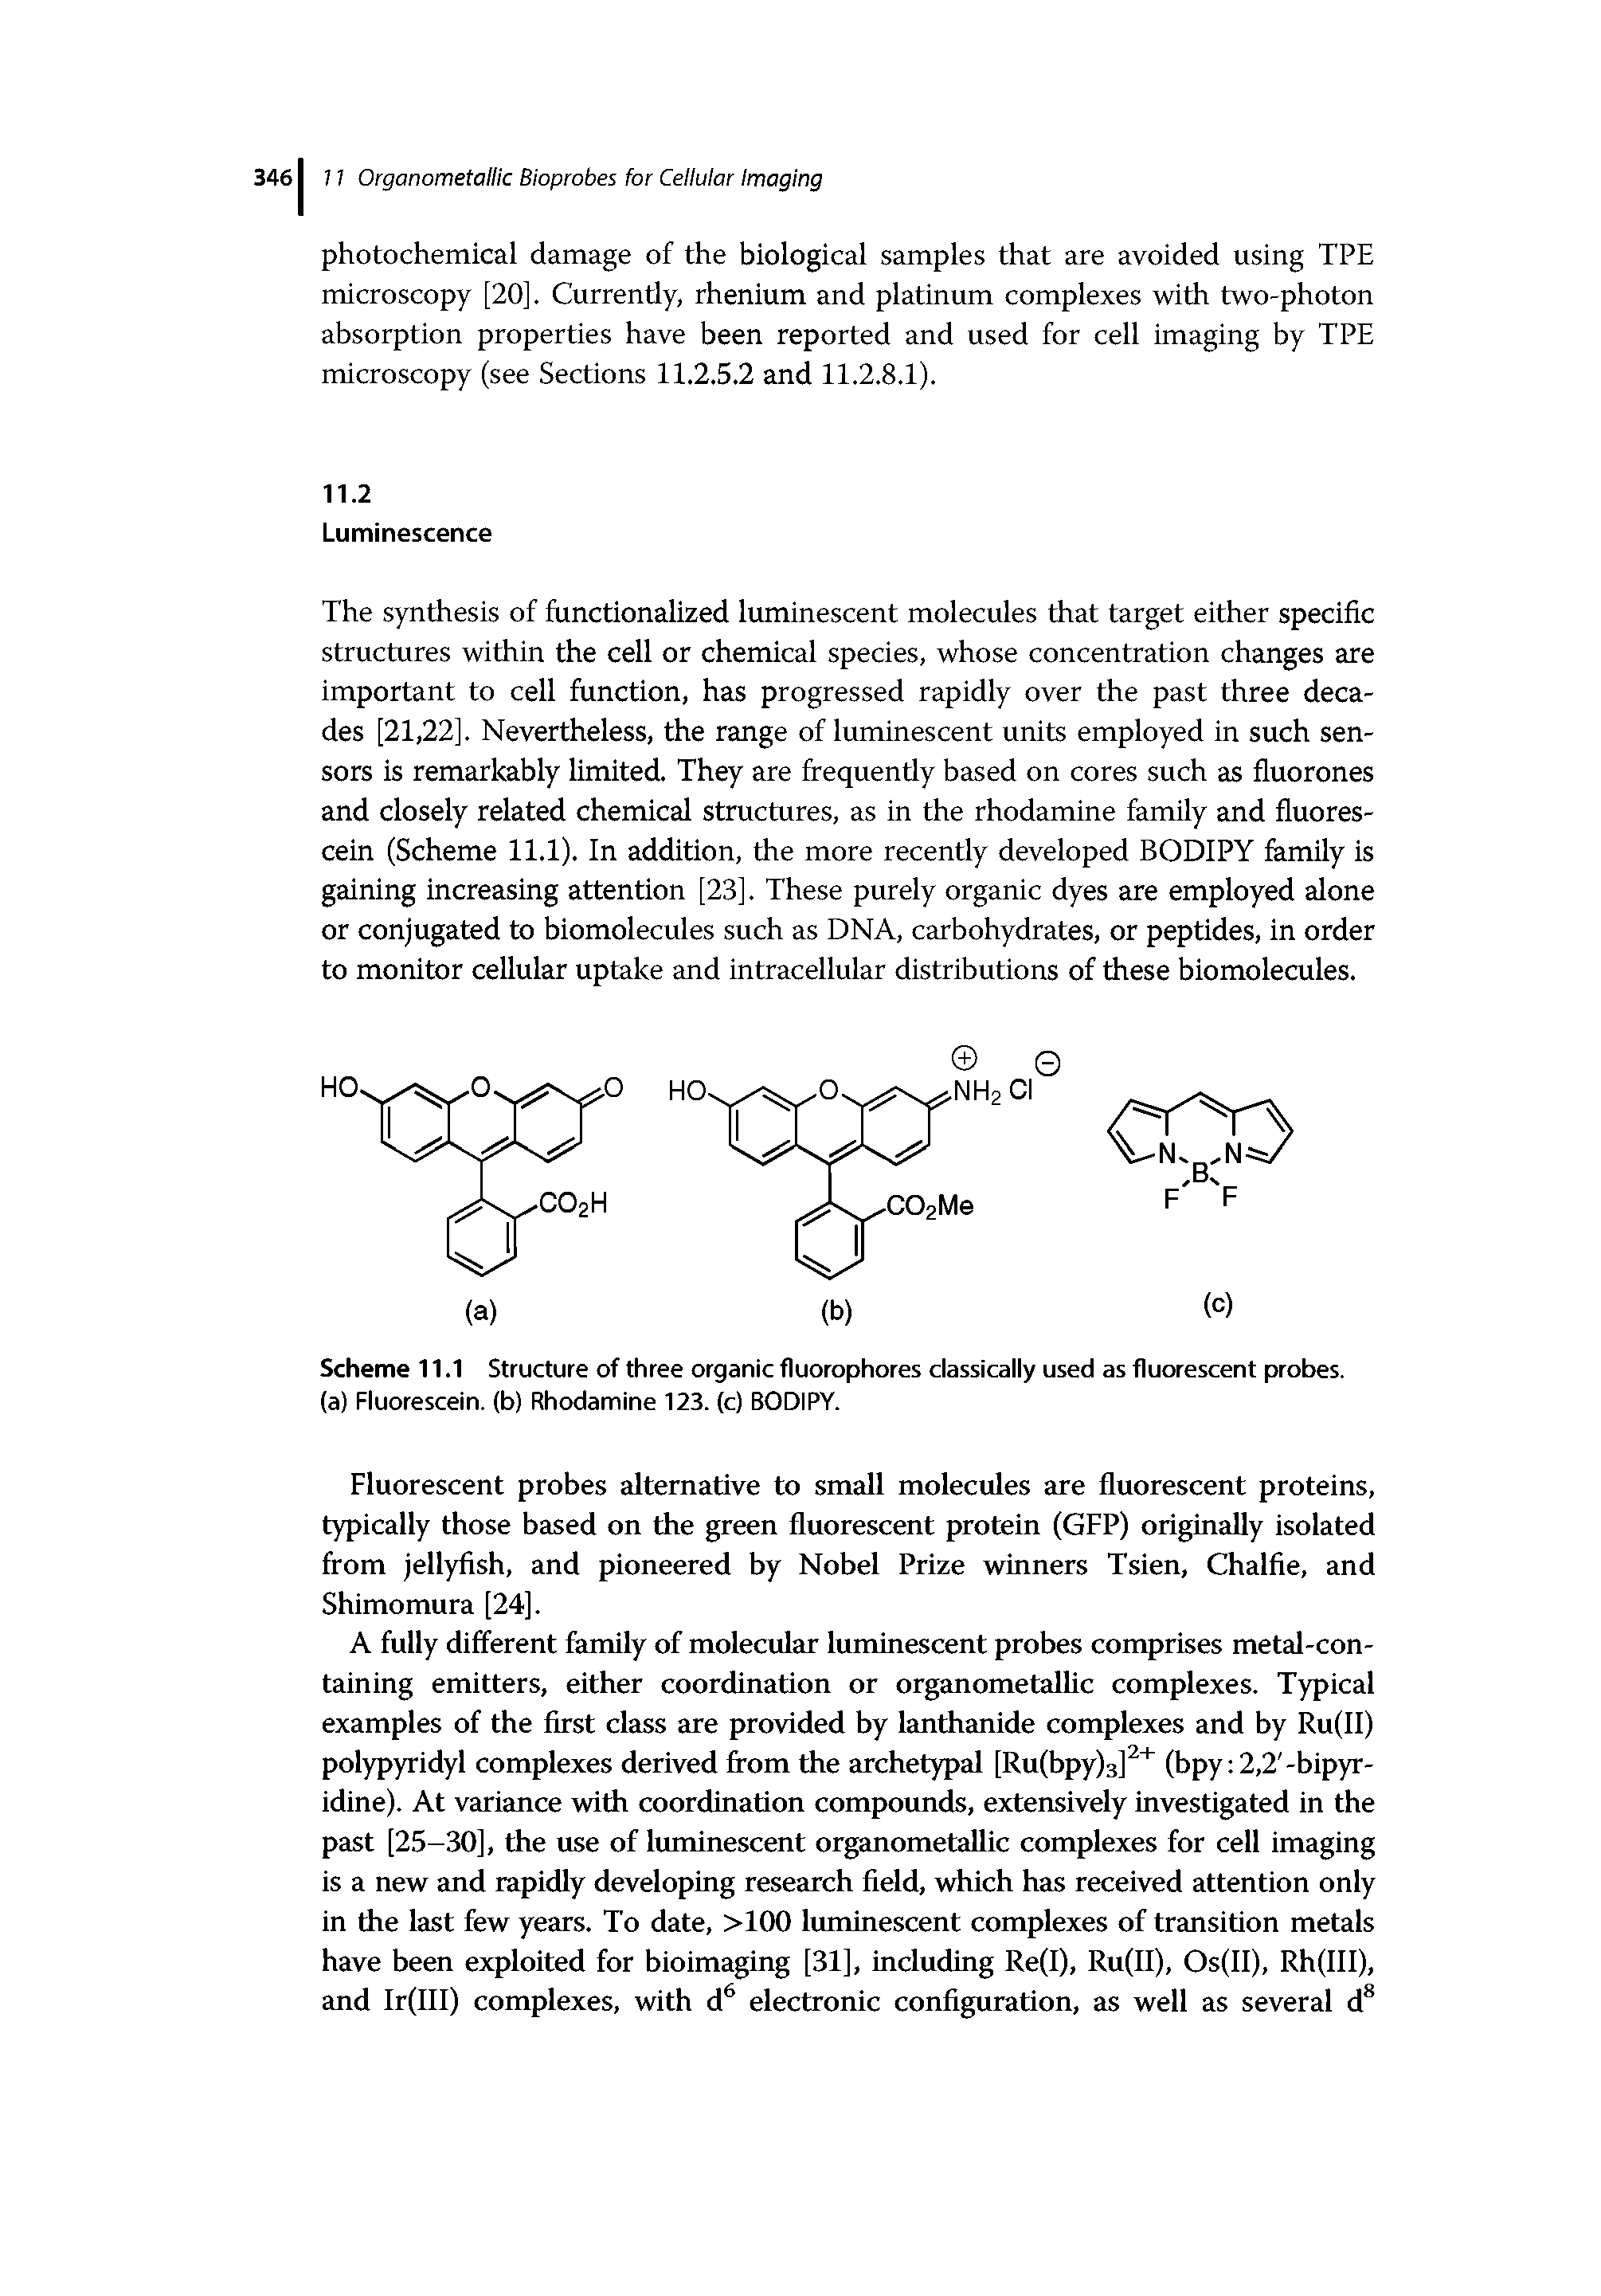 Scheme 11.1 Structure of three organic fluorophores classically used as fluorescent probes, (a) Fluorescein, (b) Rhodamine 123. (c) BODIPY.